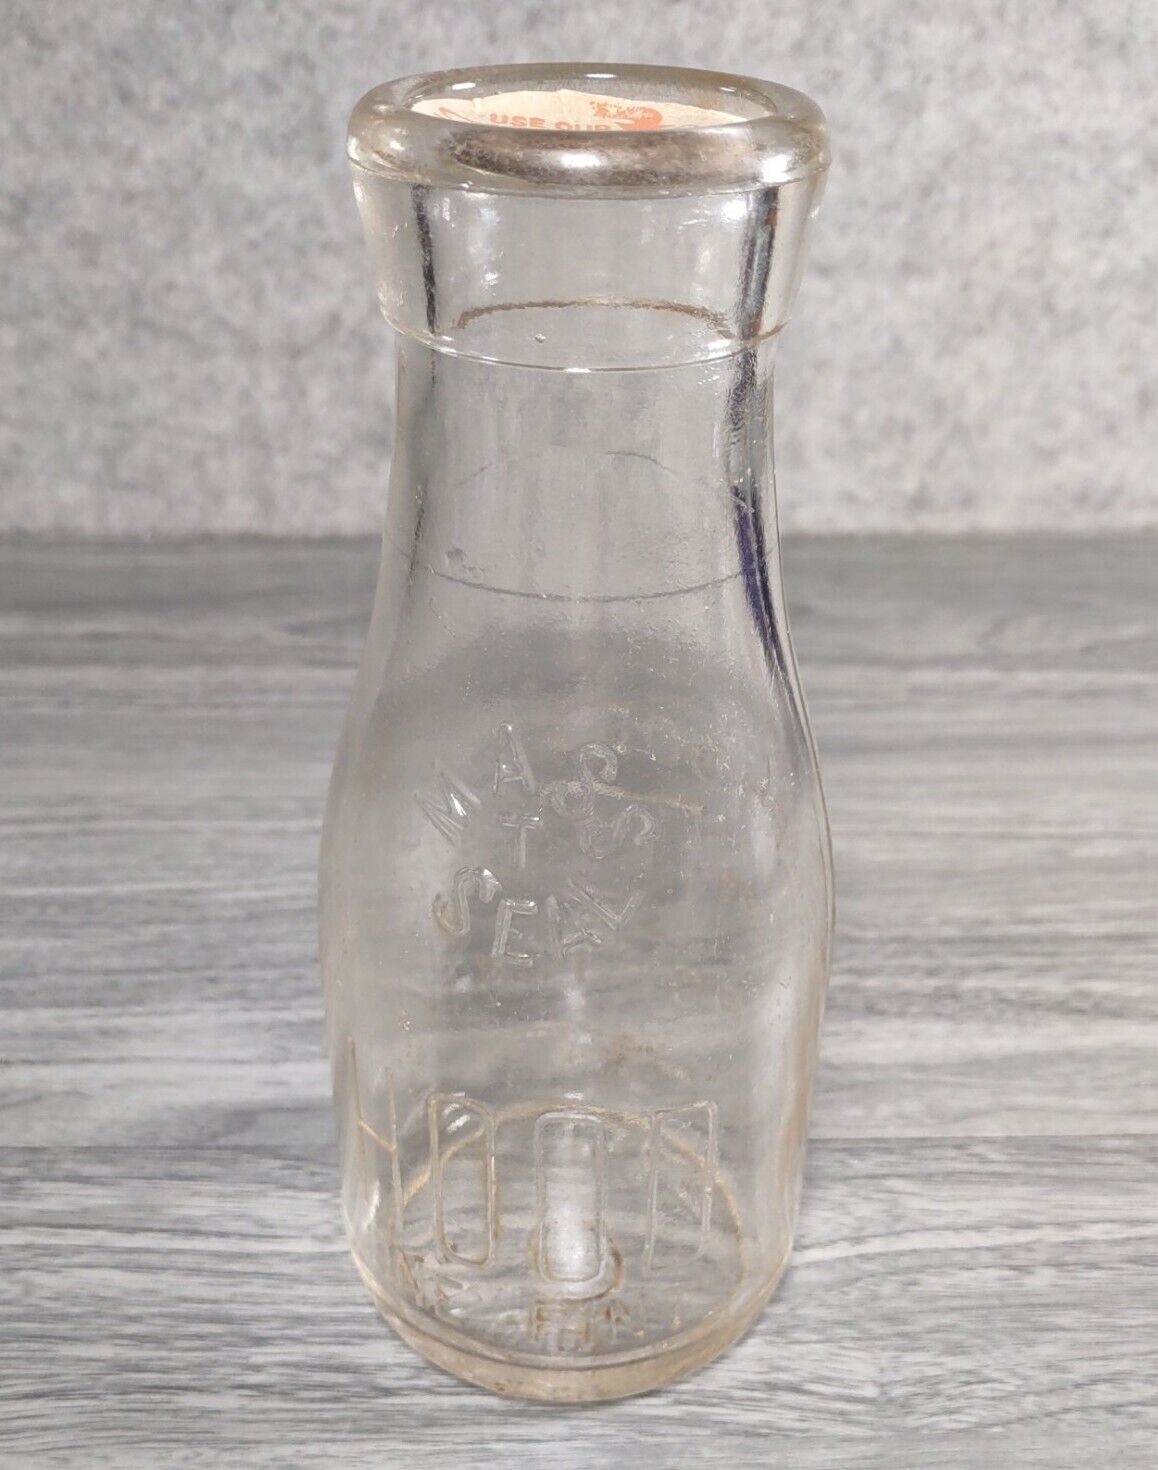 HP Hood & Sons Dairy Experts Pint Size Glass Milk Bottle Boston Mass 1924 OJ Cap